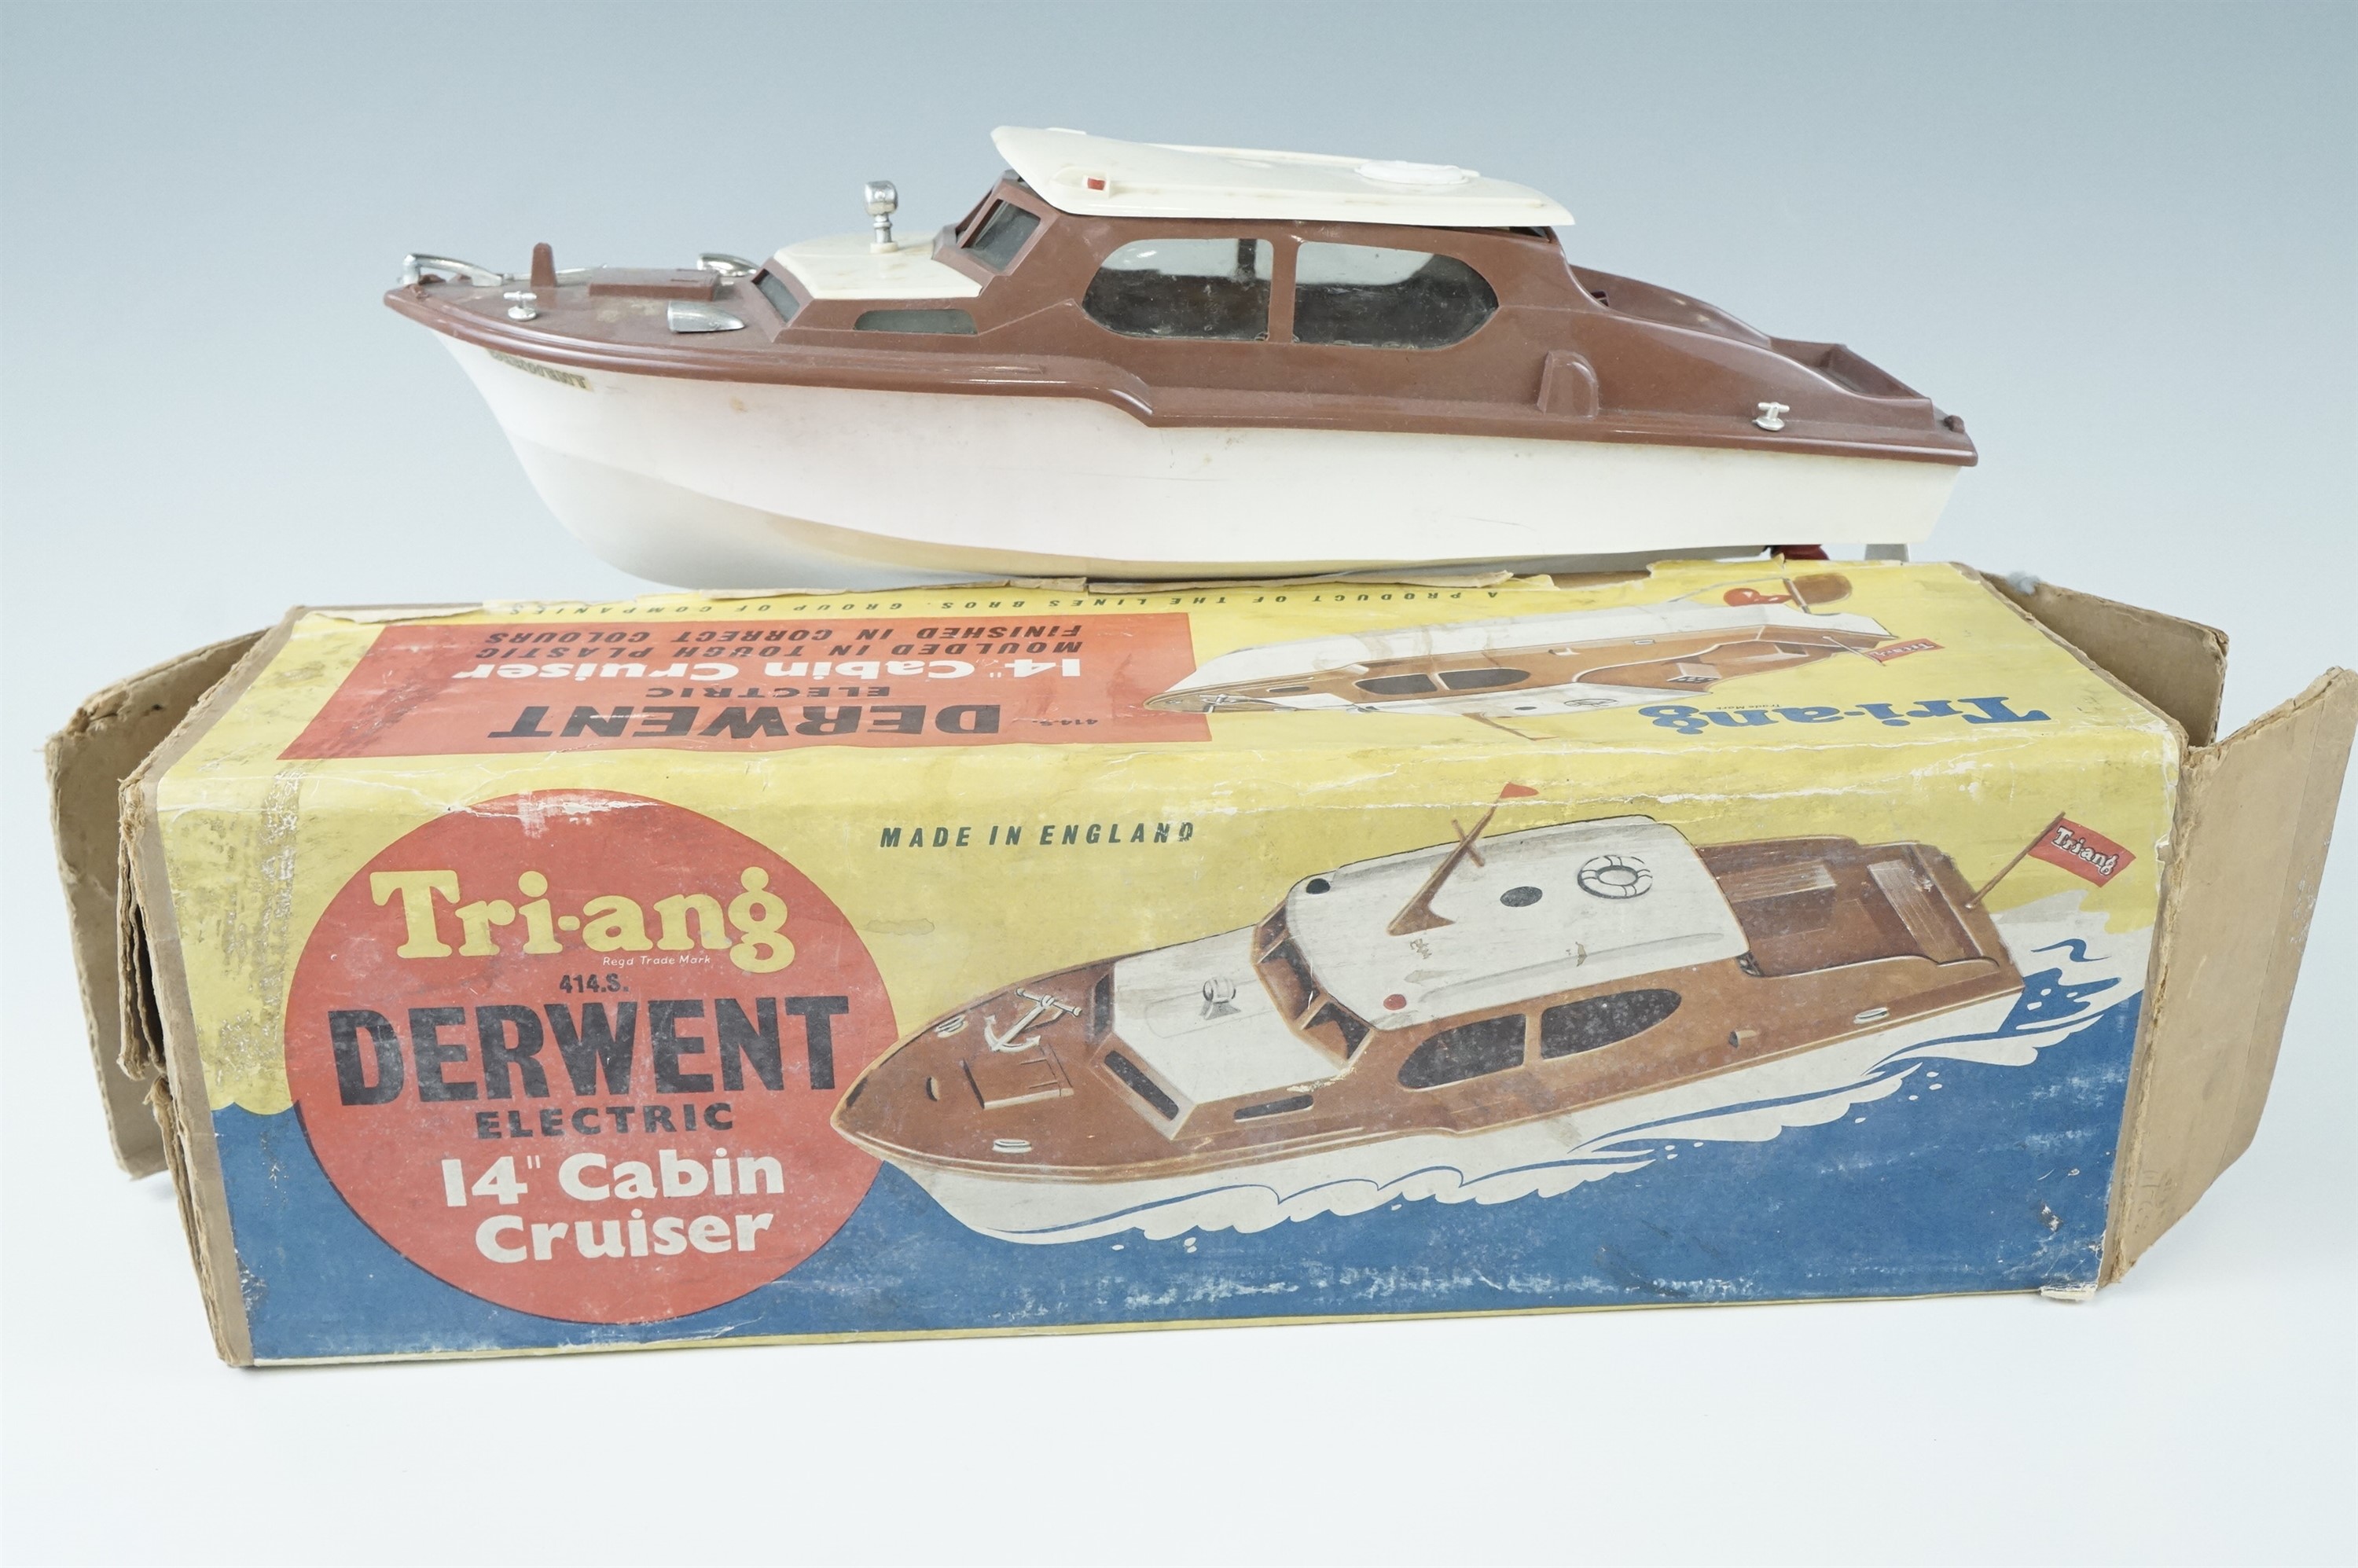 A Tri-ang "Derwent Electric 14" Cabin Cruiser", in original carton